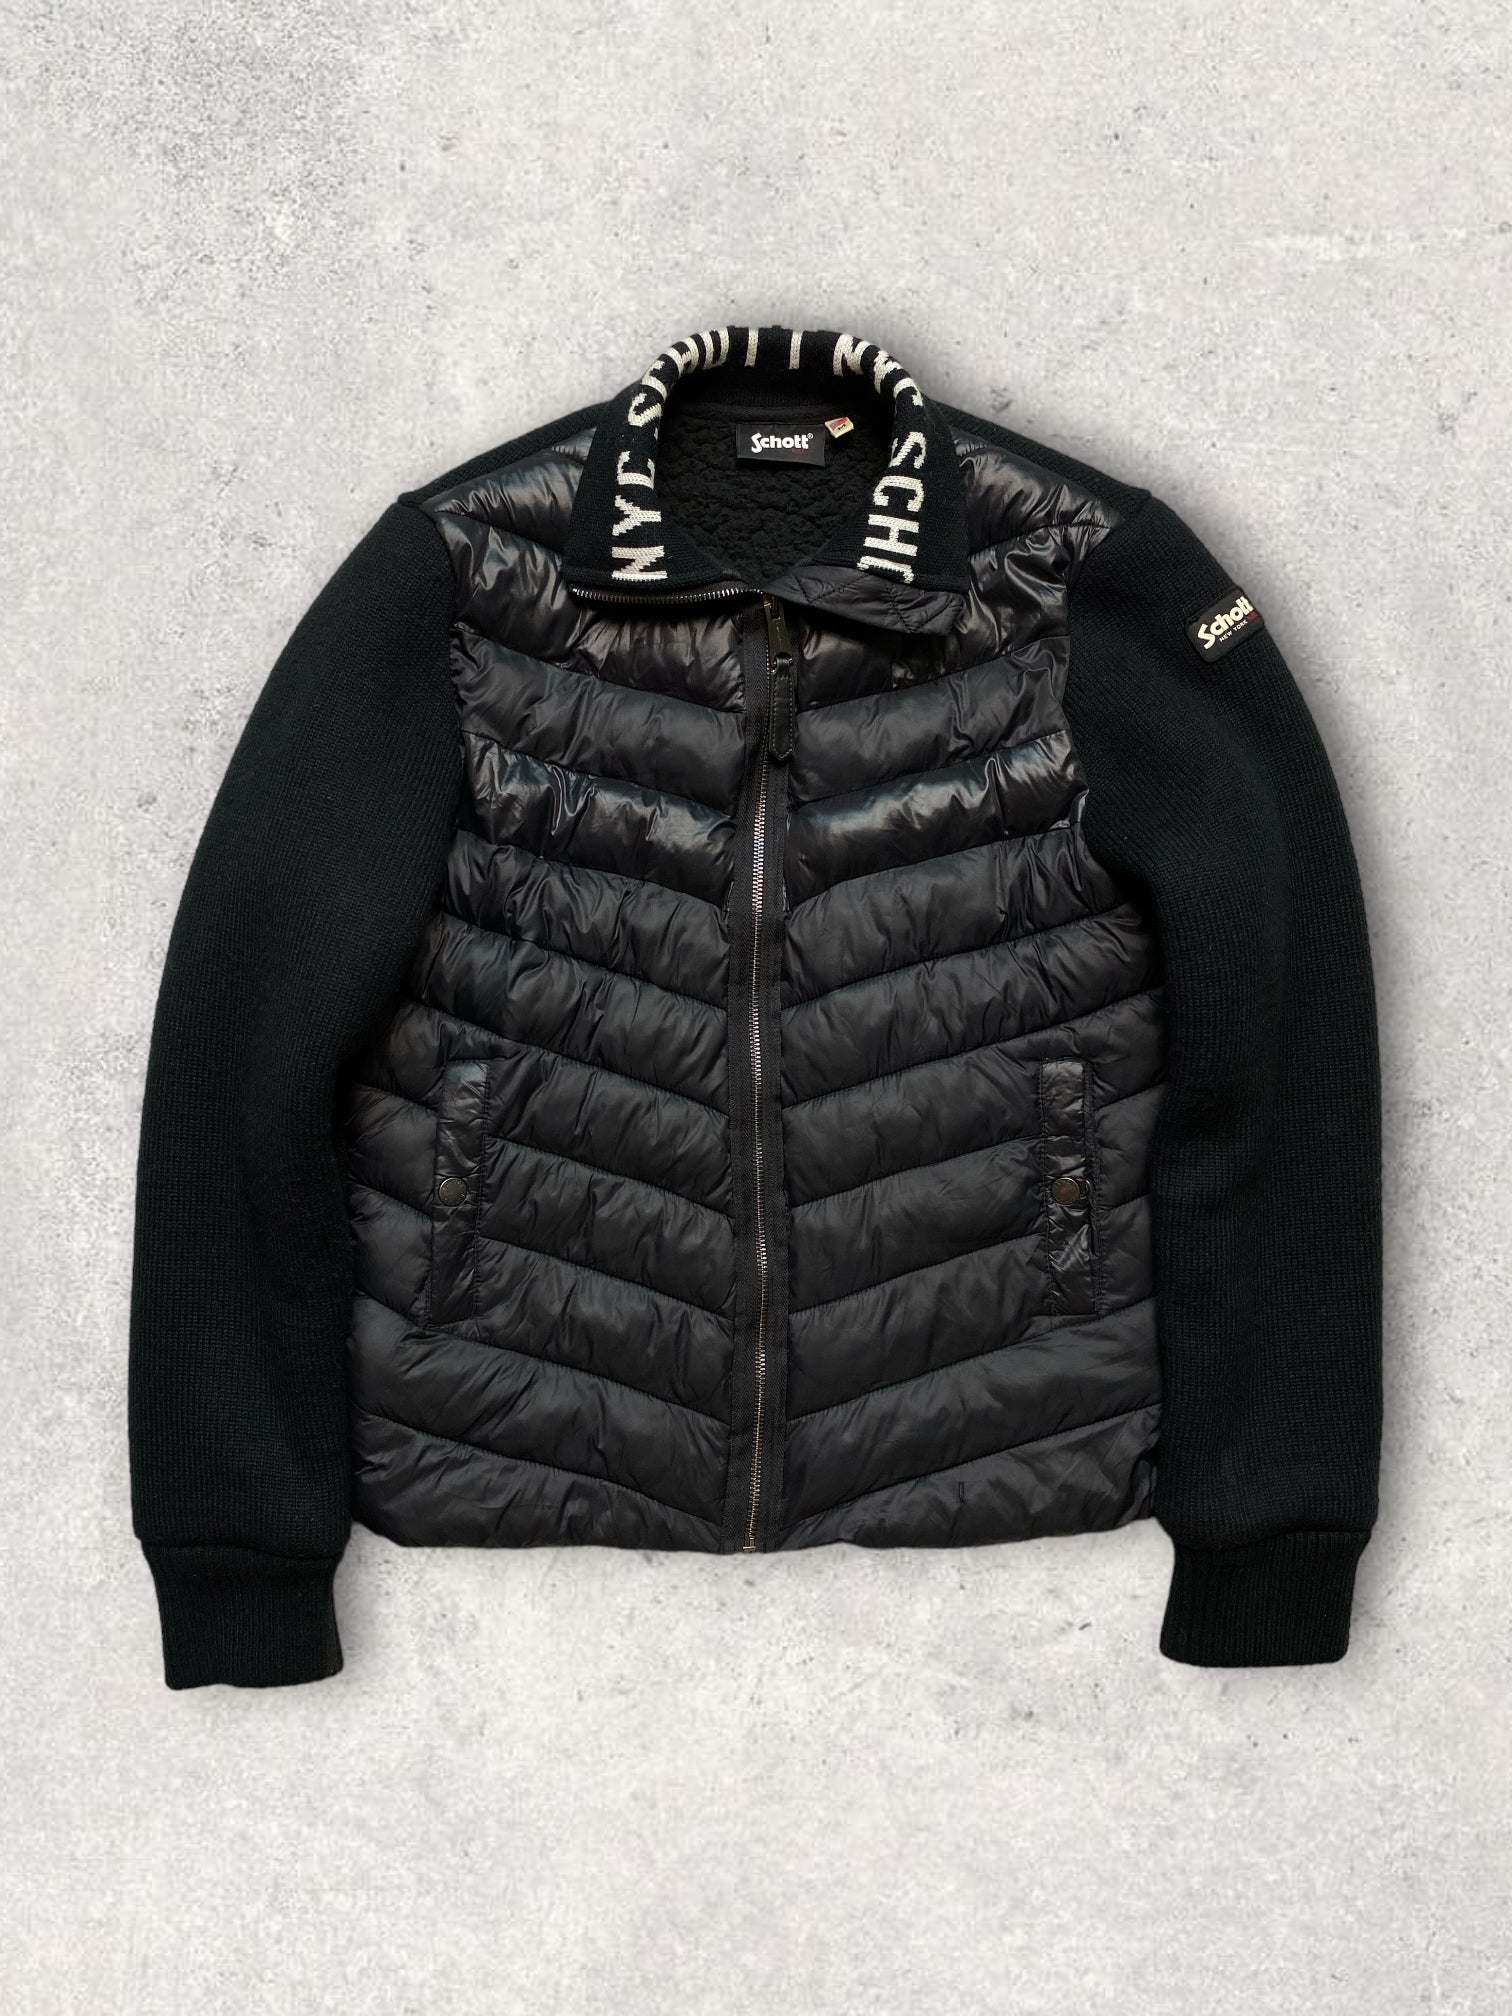 Schott puffer black jacket y2k drip drill streetwear vintage y2k